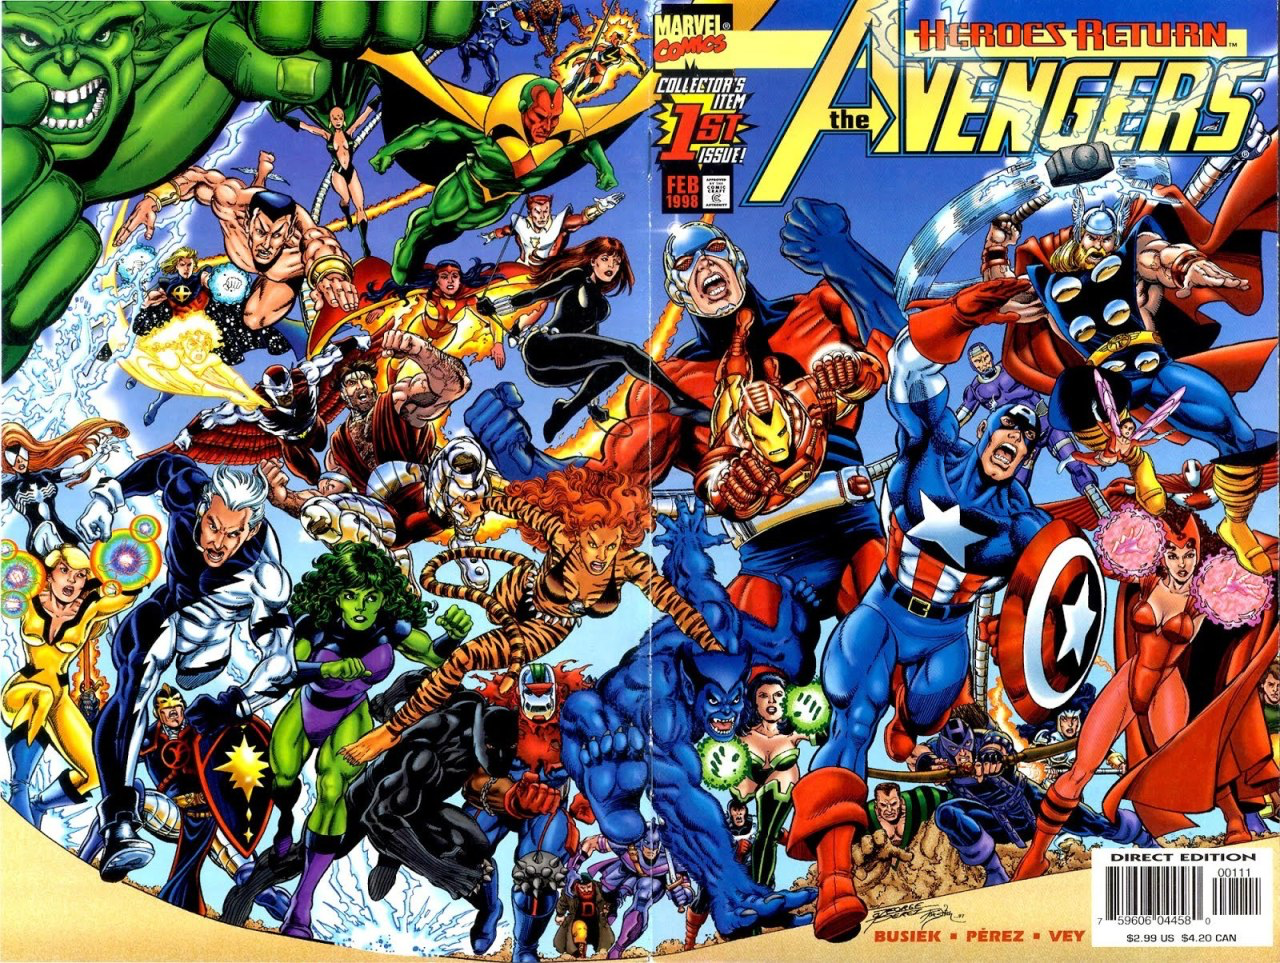 The Avengers #1 - Heroes Return (February 1998) - art by George Pérez